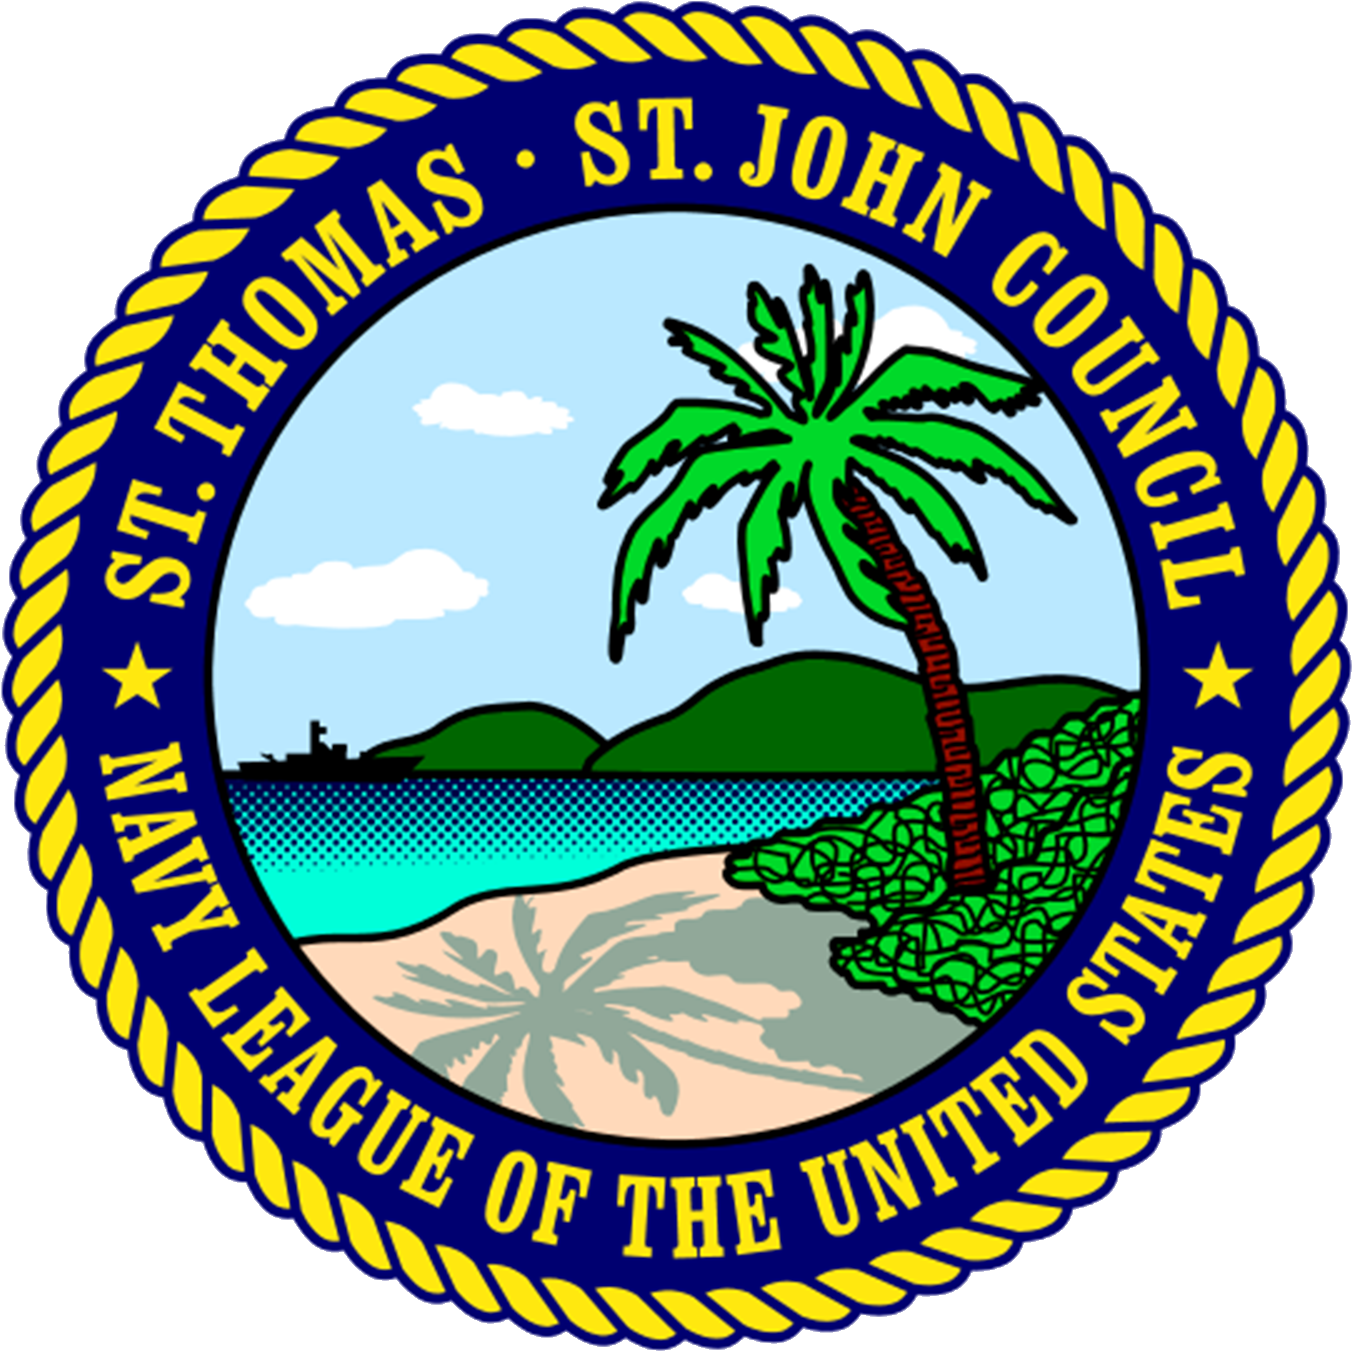 Navy League Of The United States St Thomas St John - Navy League Of The United States St Thomas St John (1468x1403)